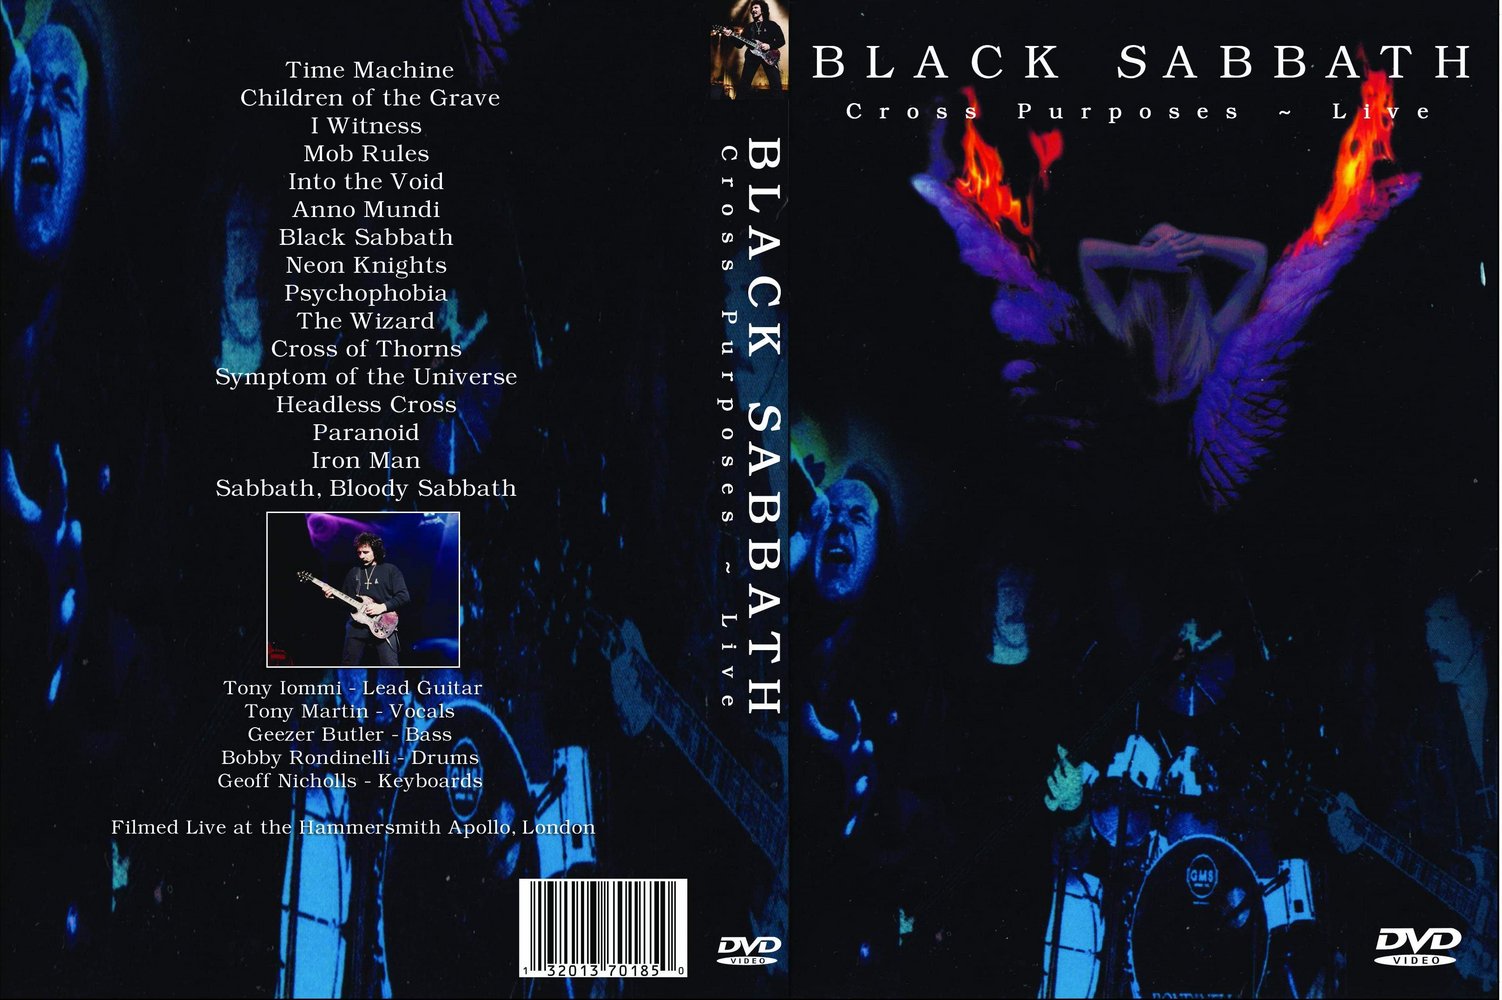 DjCook59 - Black_Sabbath_Cross_Purposes_Live-front.jpg